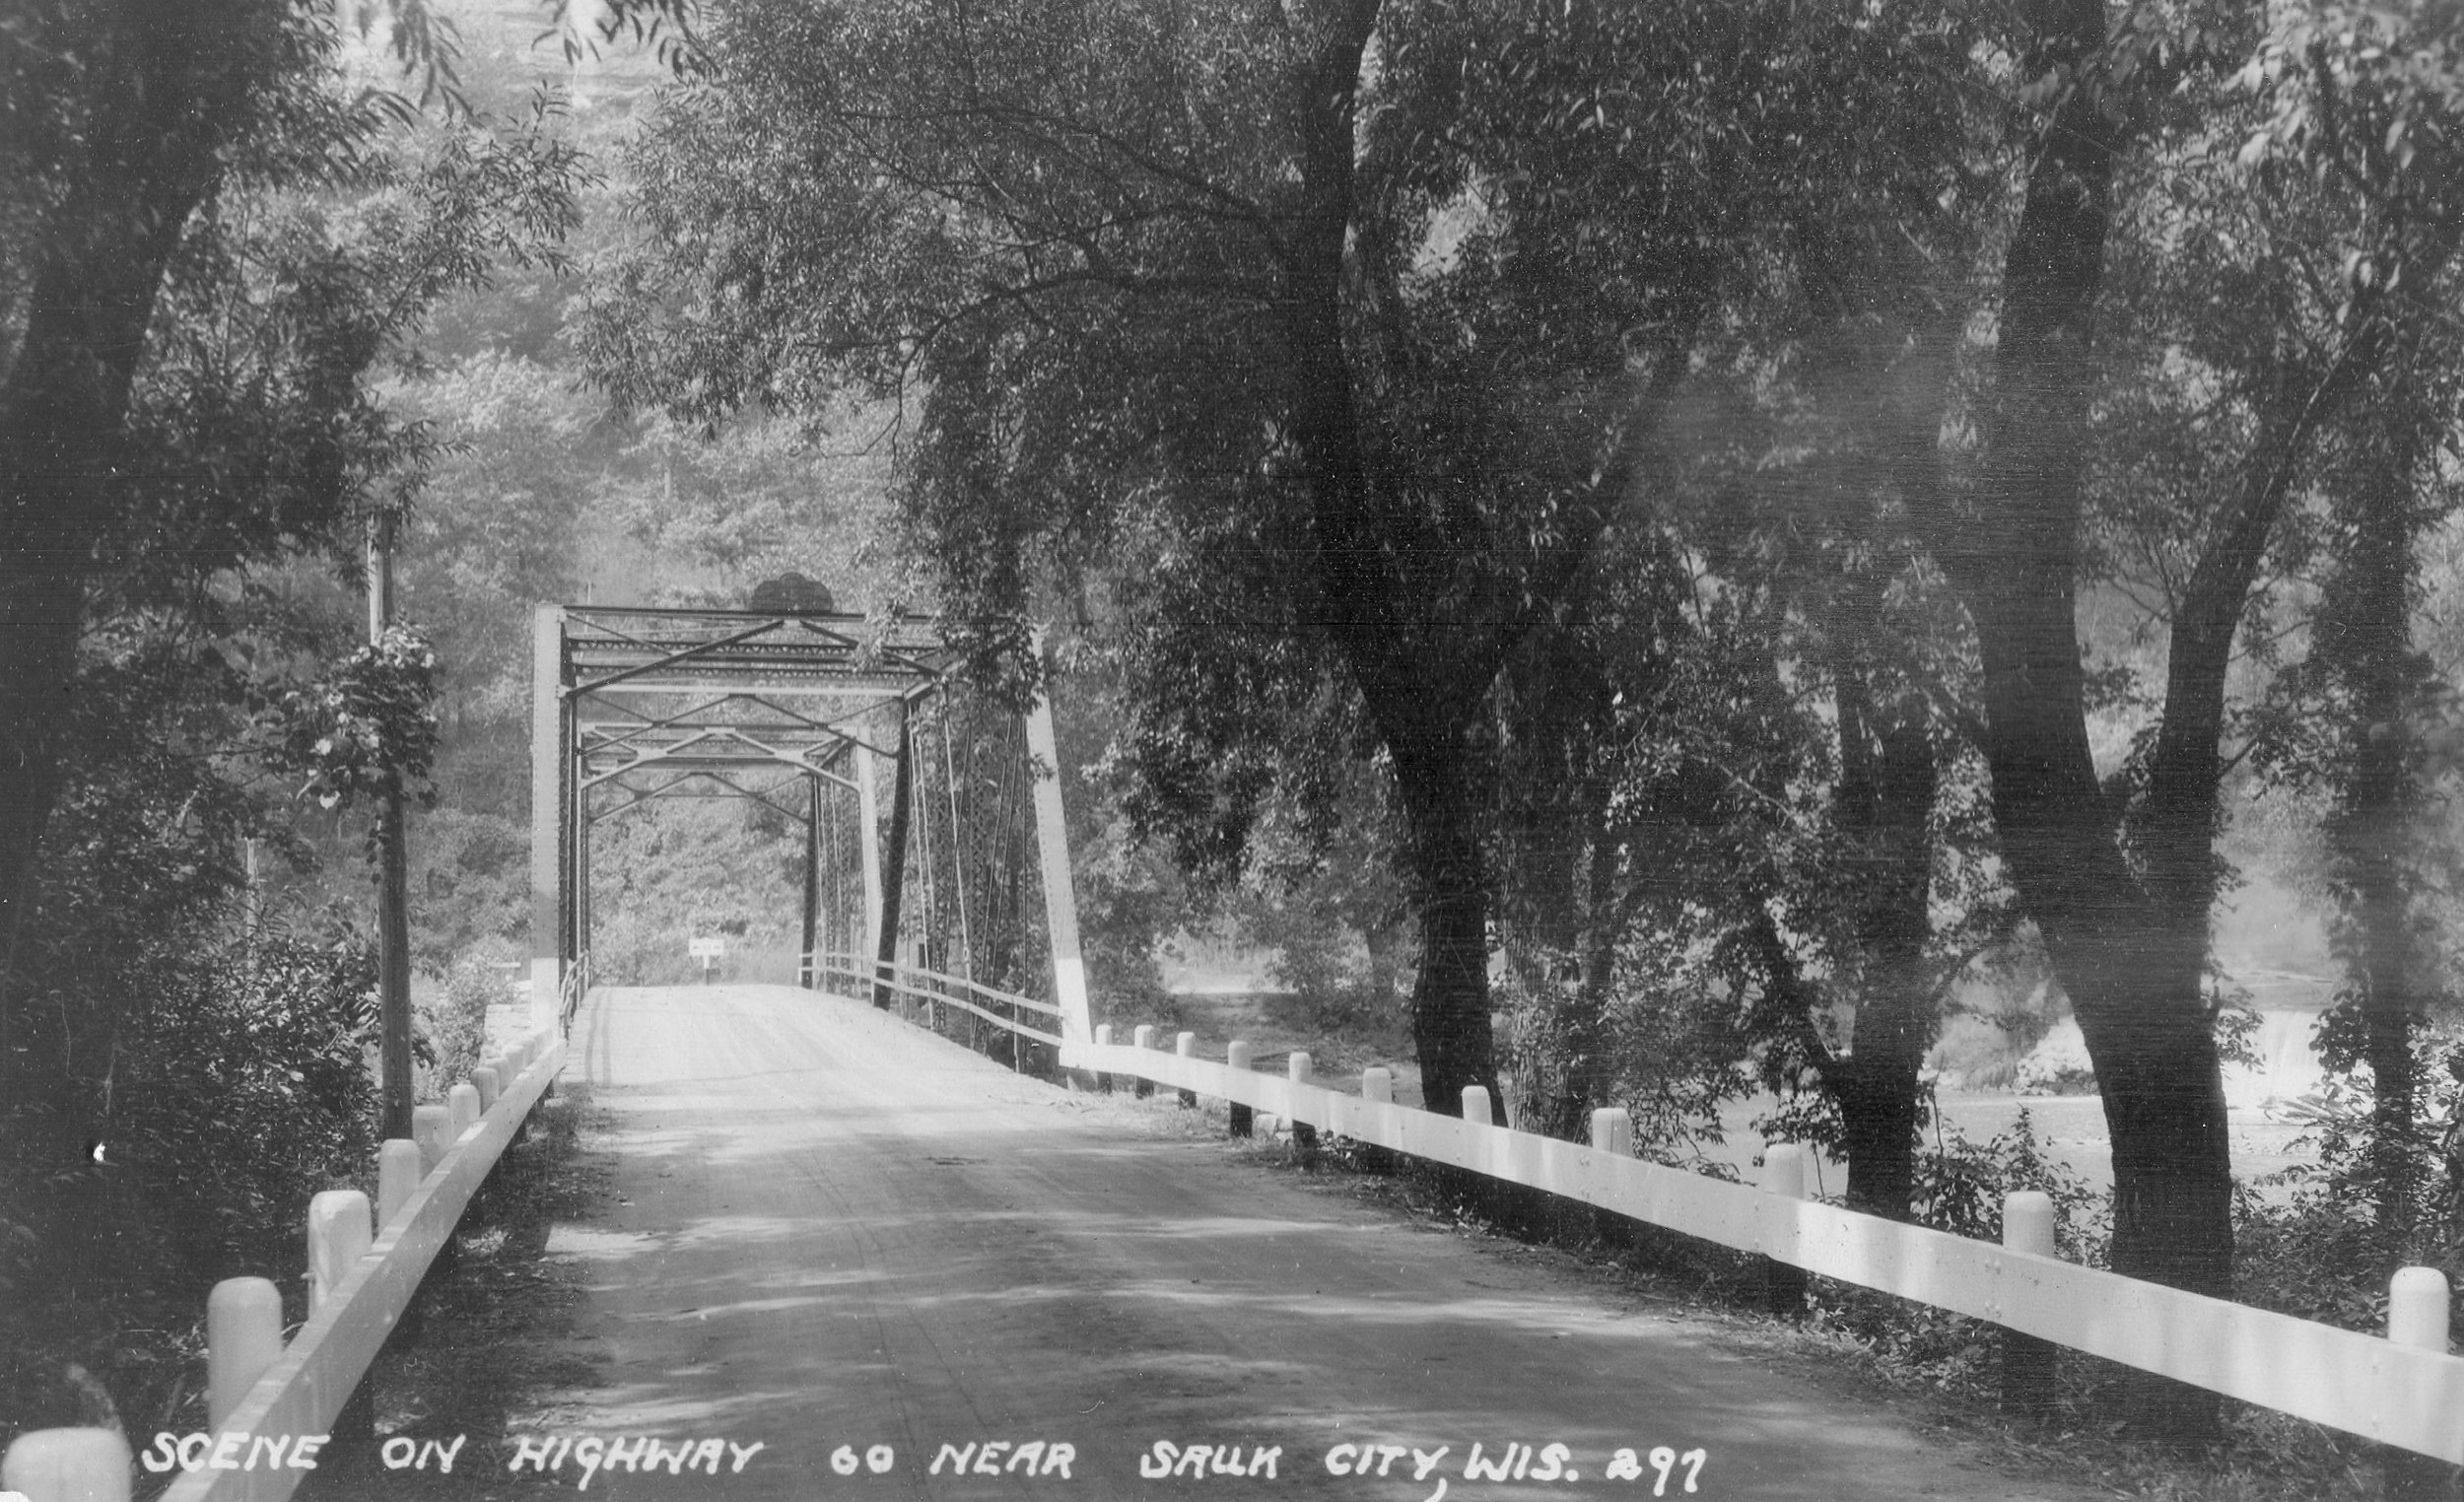 Bridge on Hwy 60